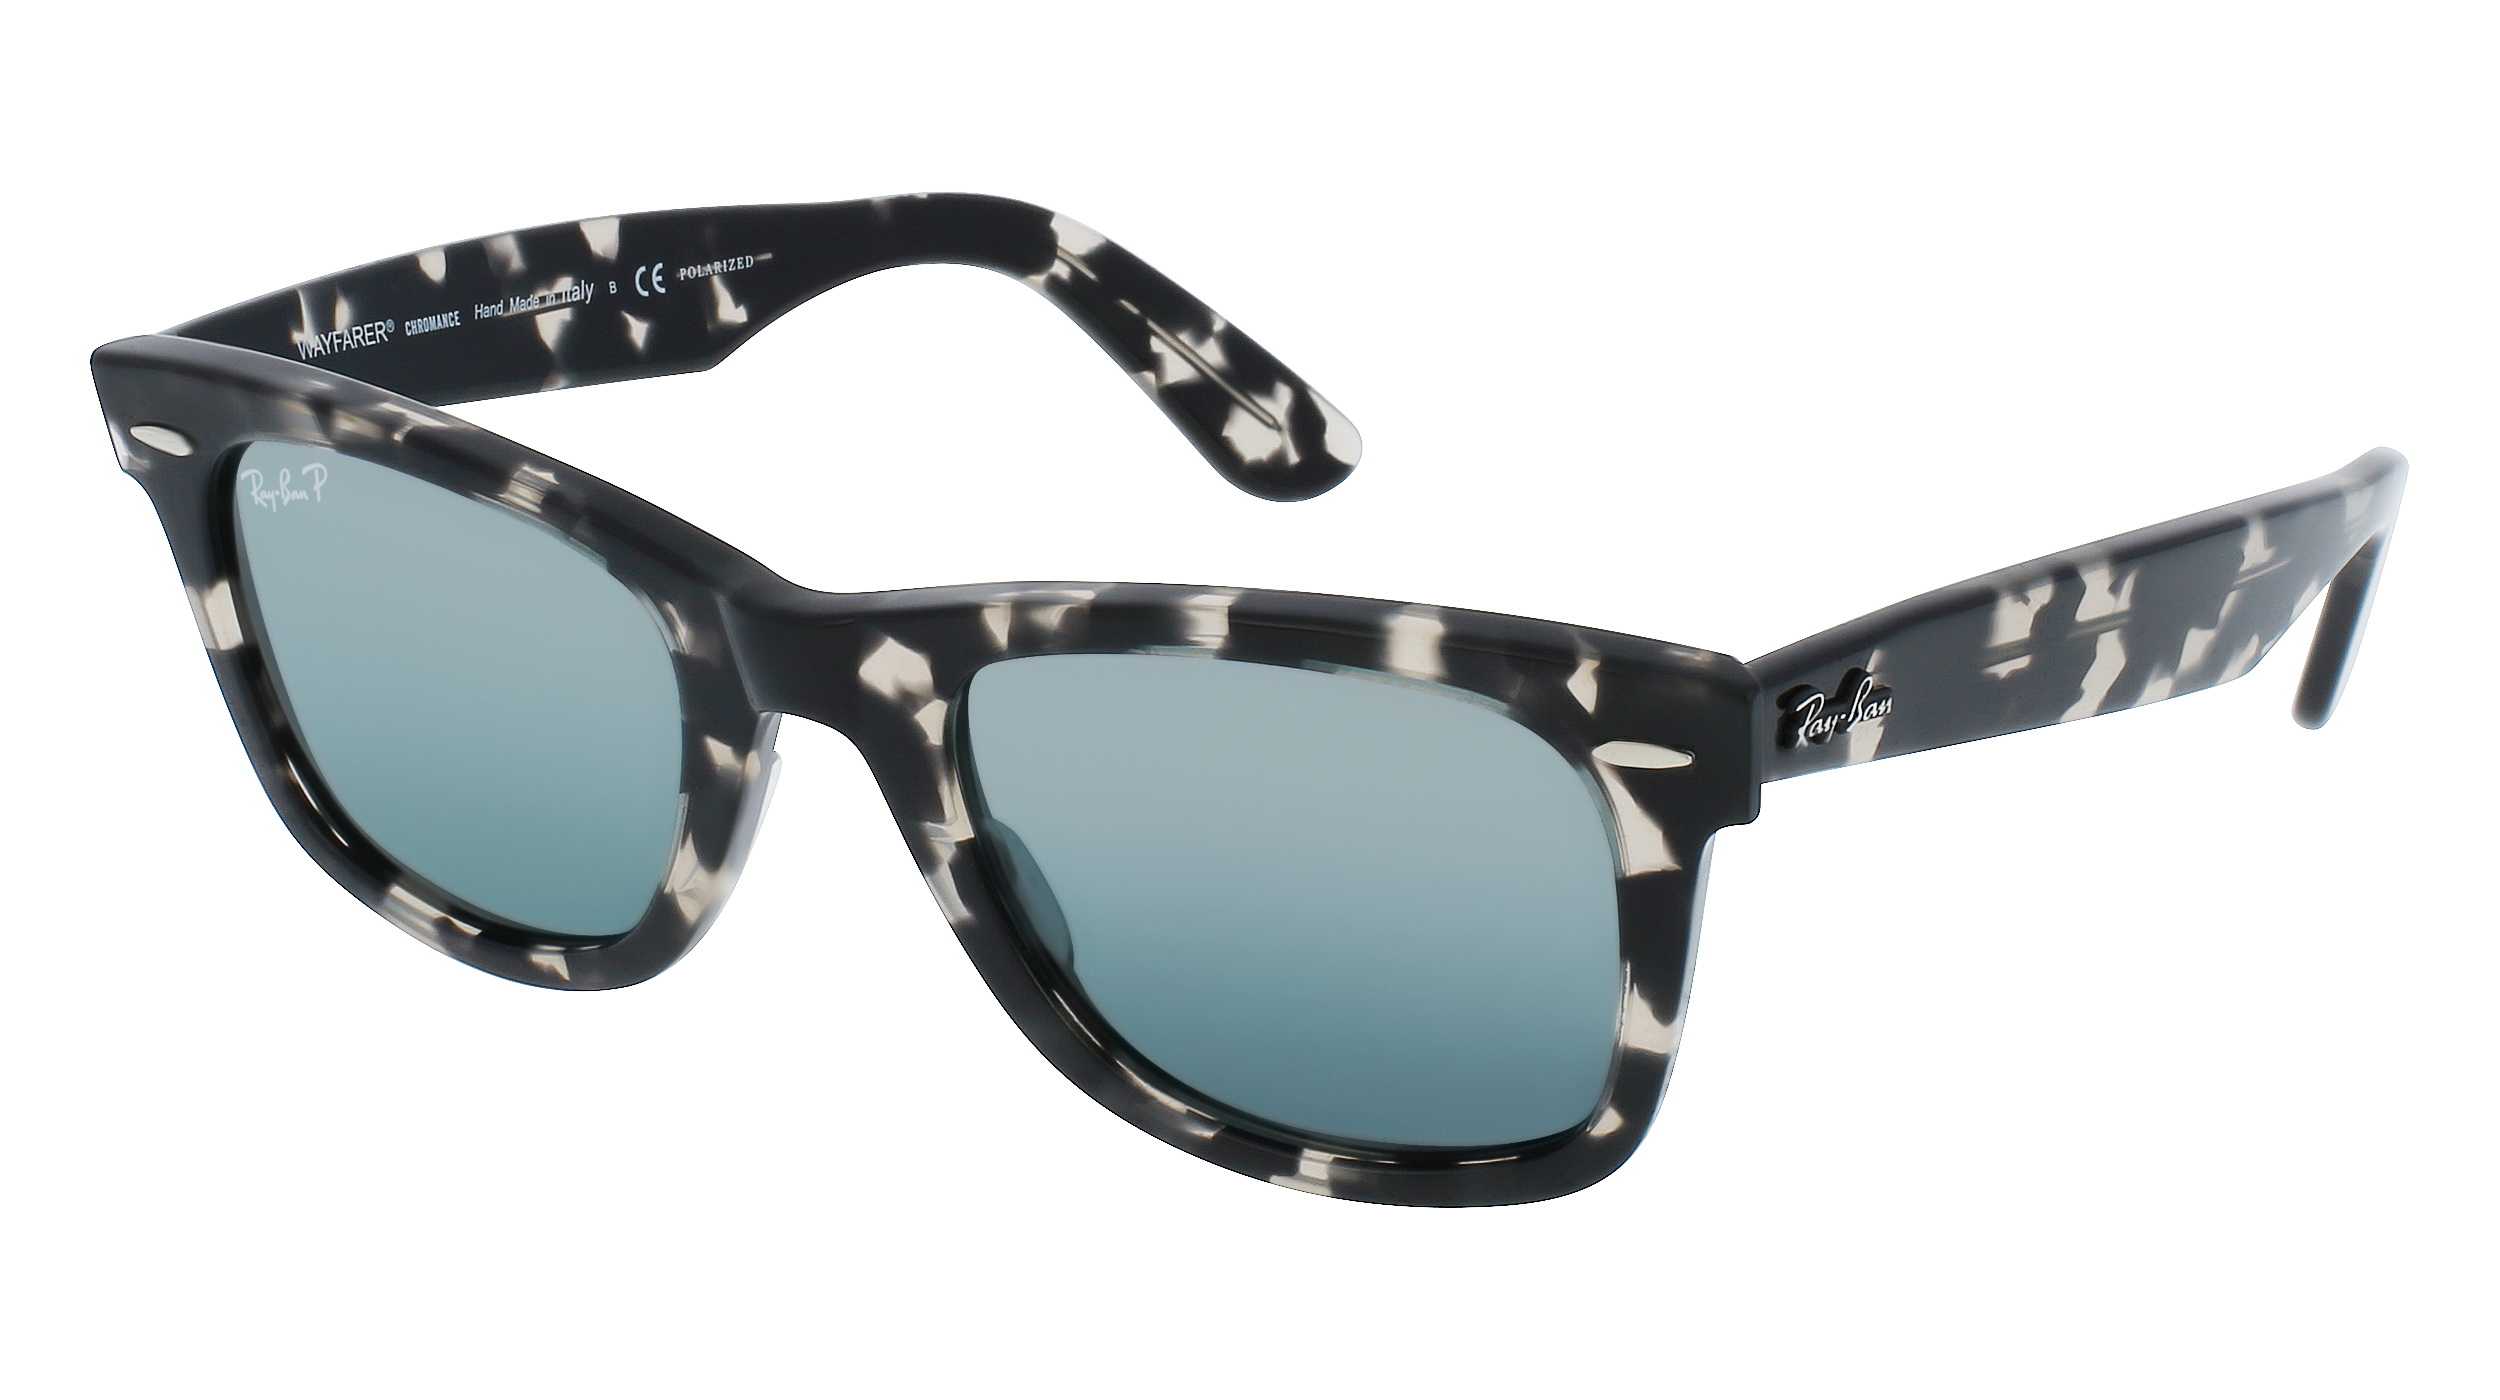 Sunglasses RB 2140 1333G6 Wayfarer 50/22 Unisex Ecailles grises Wayfarer Full Frame Glasses Vintage 50mmx22mm 158&#163;